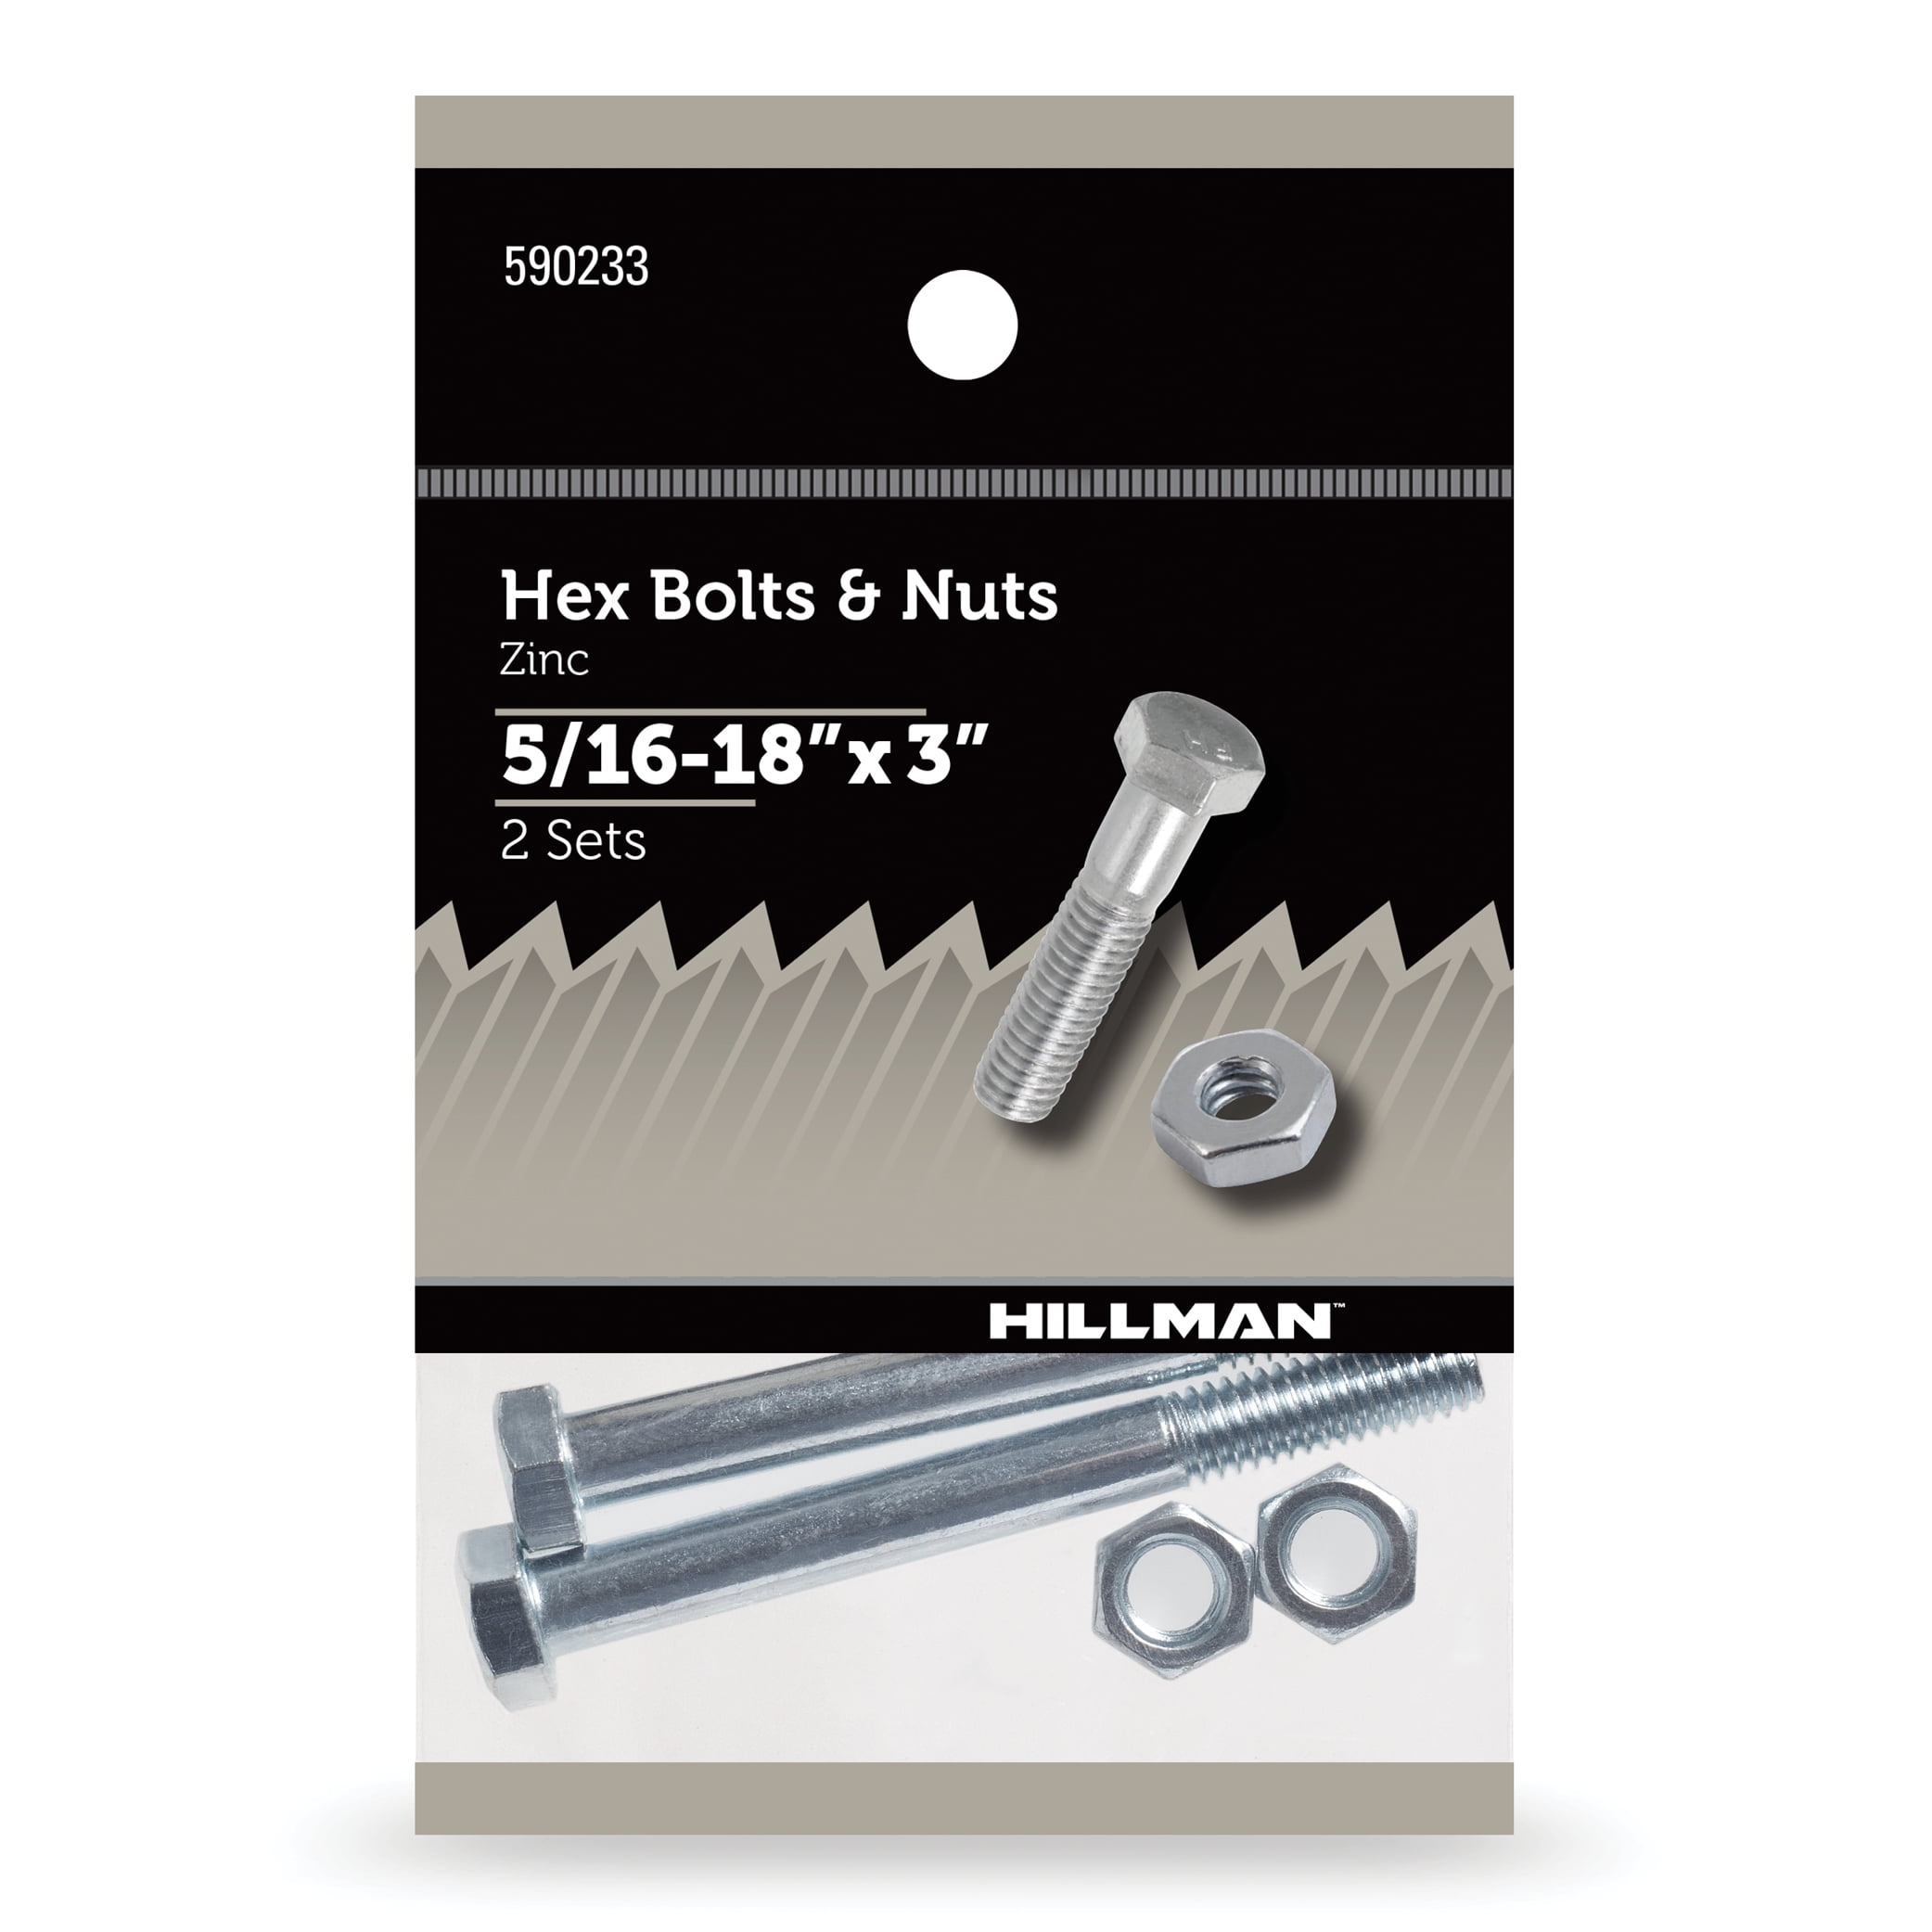 Hillman Hex Bolts and Nuts, Grade 2 Steel, Zinc, 5/16-18" x 3", 2 Sets